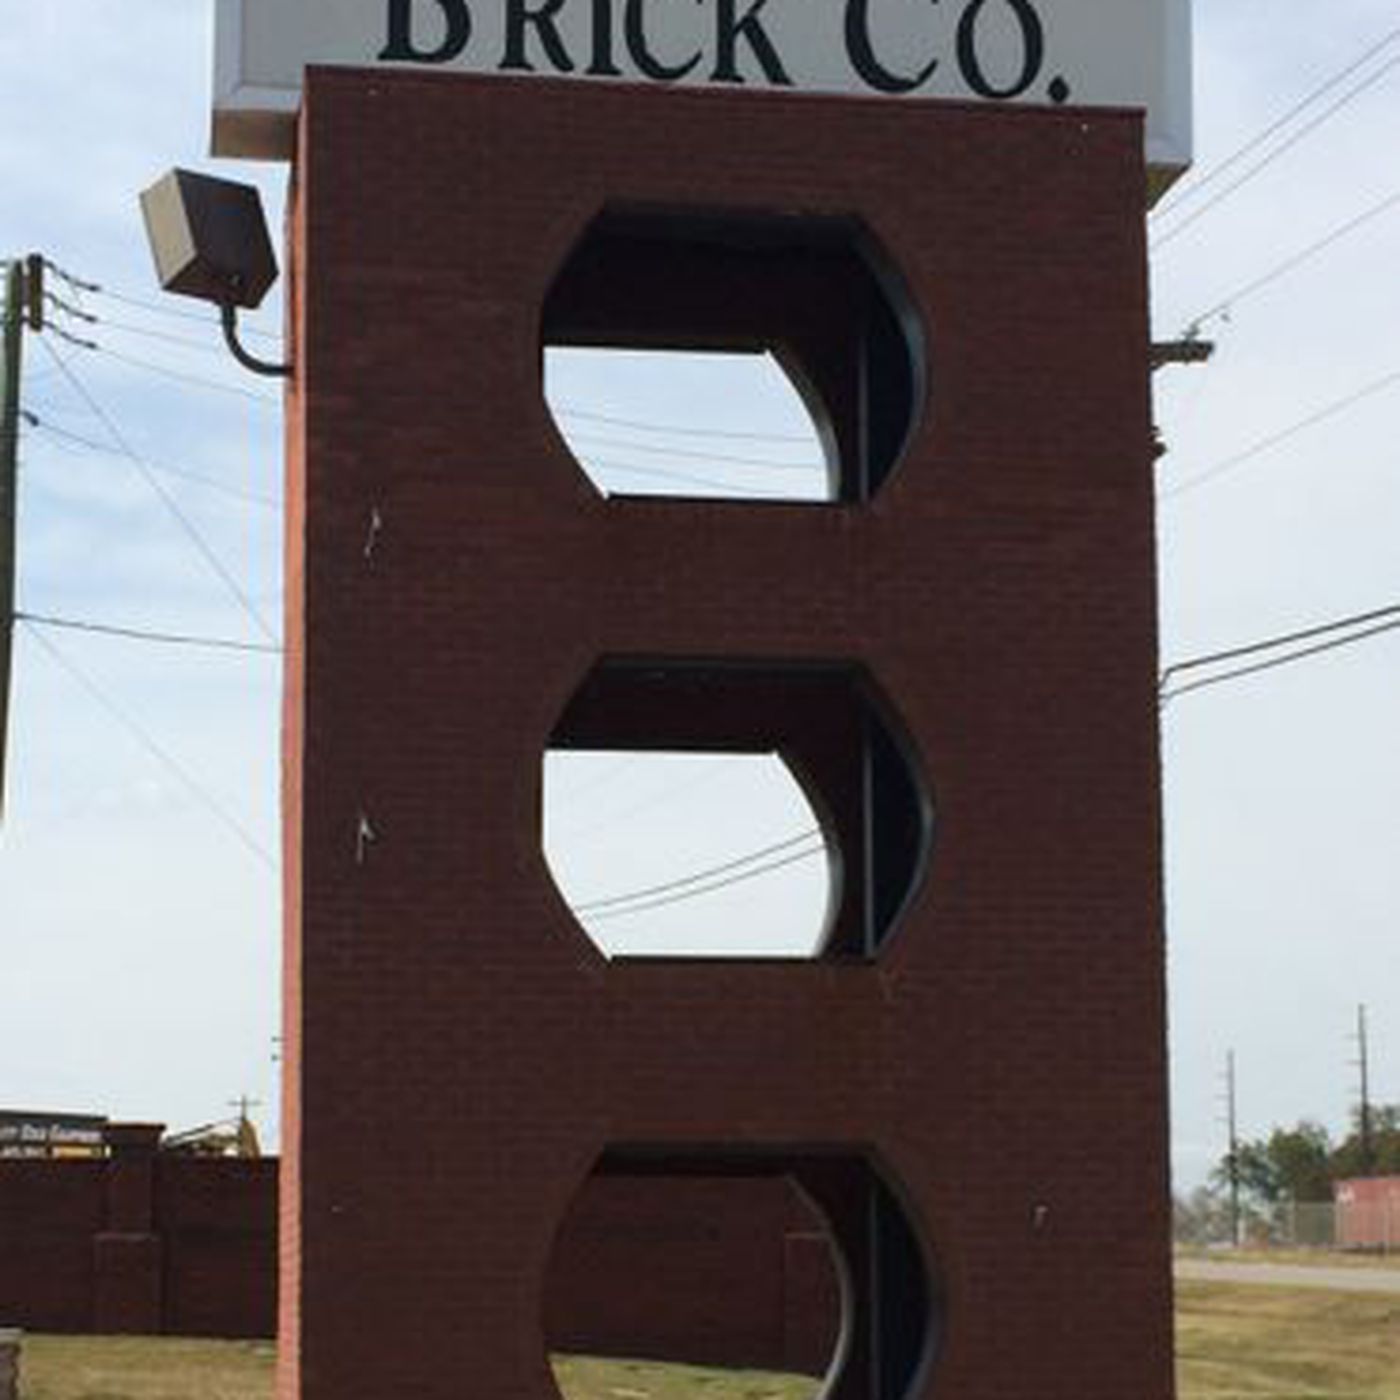 World’s Largest Brick Made of Bricks: world record in Montgomery, Alabama